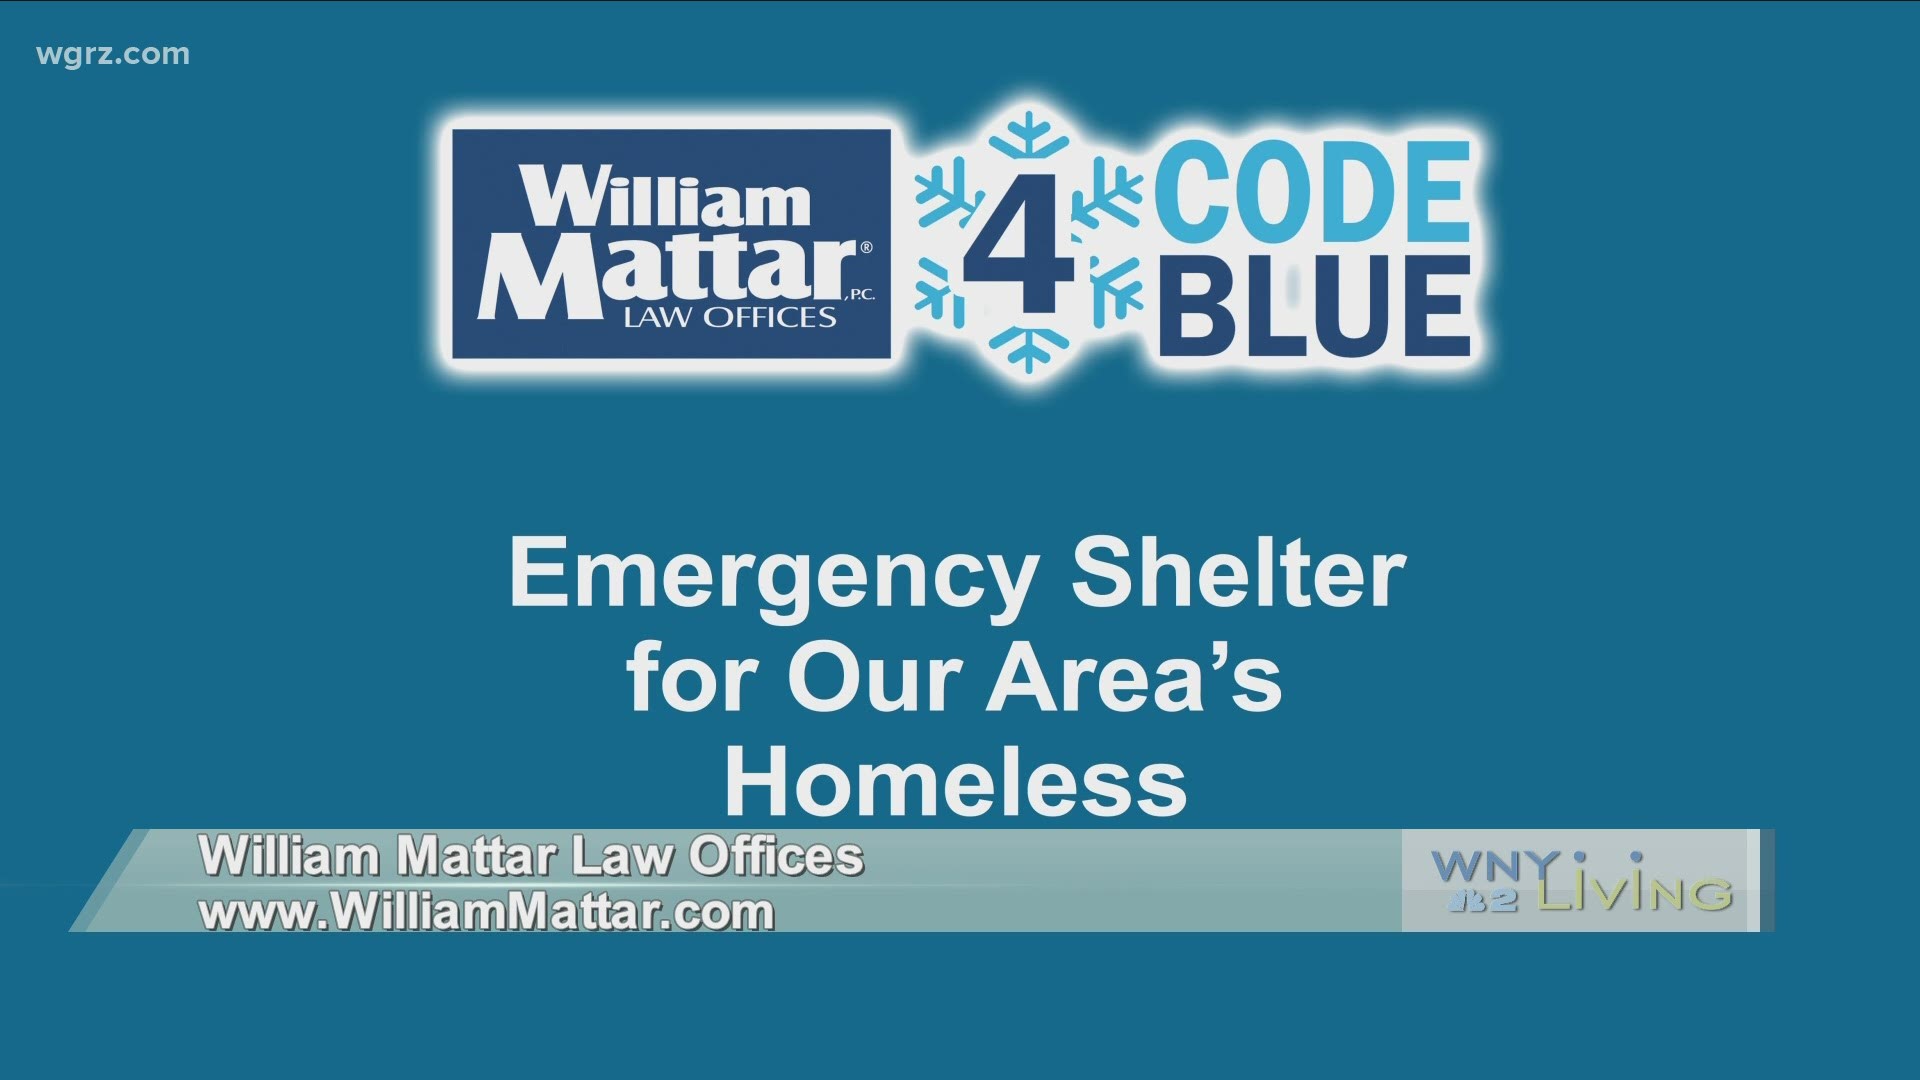 WNY Living - December 19 - William Mattar Law Offices (THIS VIDEO IS SPONSORED BY WILLIAM MATTAR LAW OFFICES)